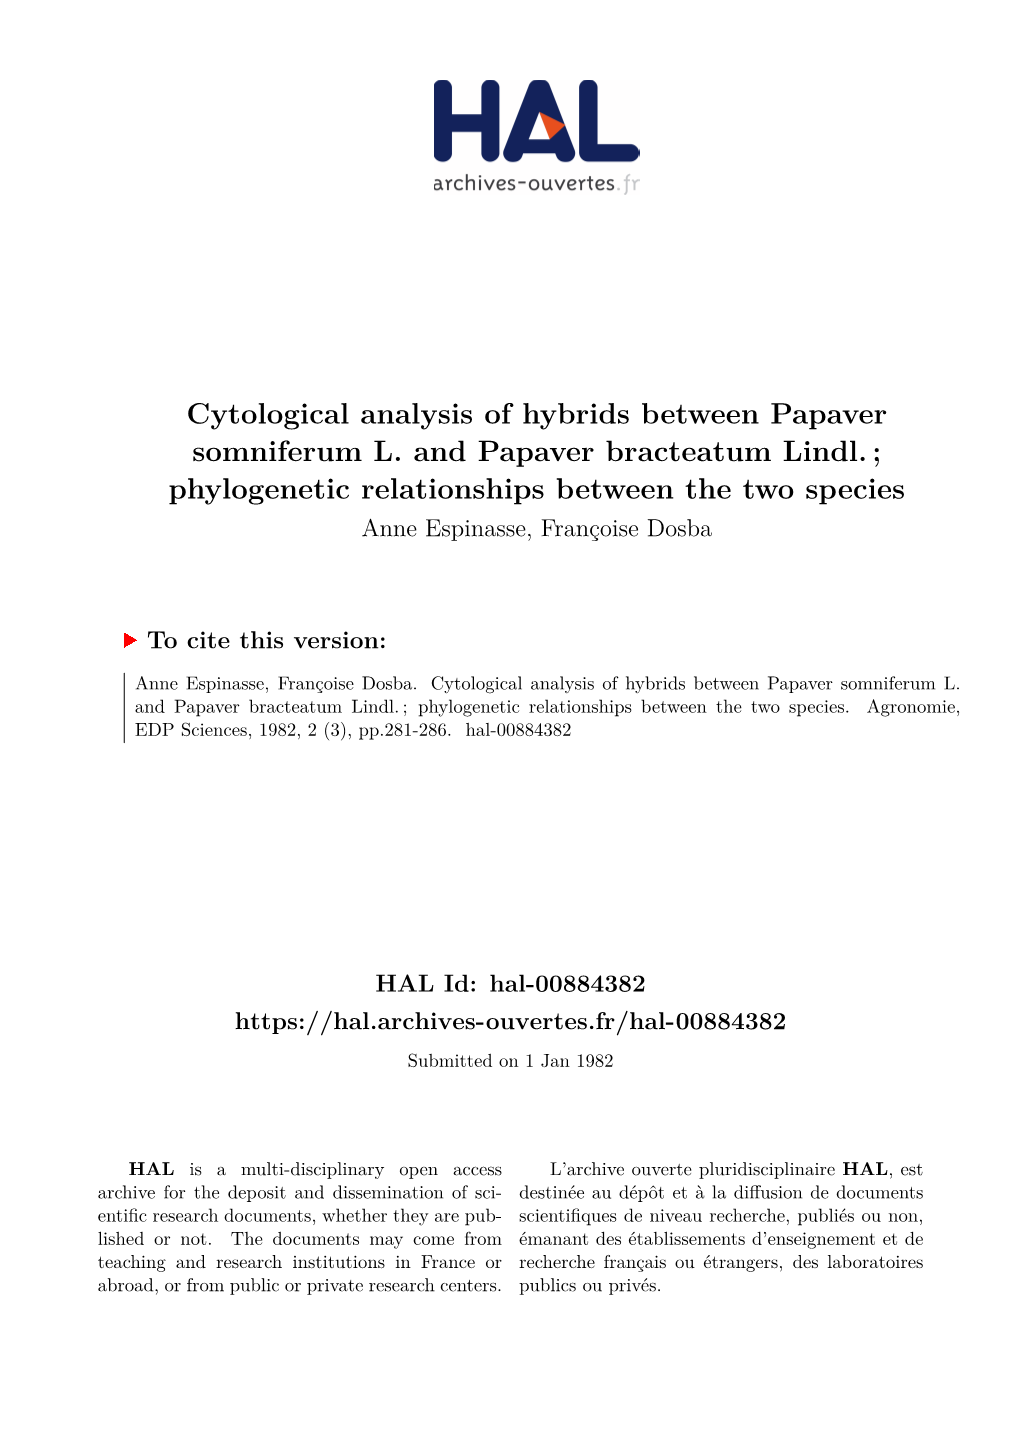 Cytological Analysis of Hybrids Between Papaver Somniferum L